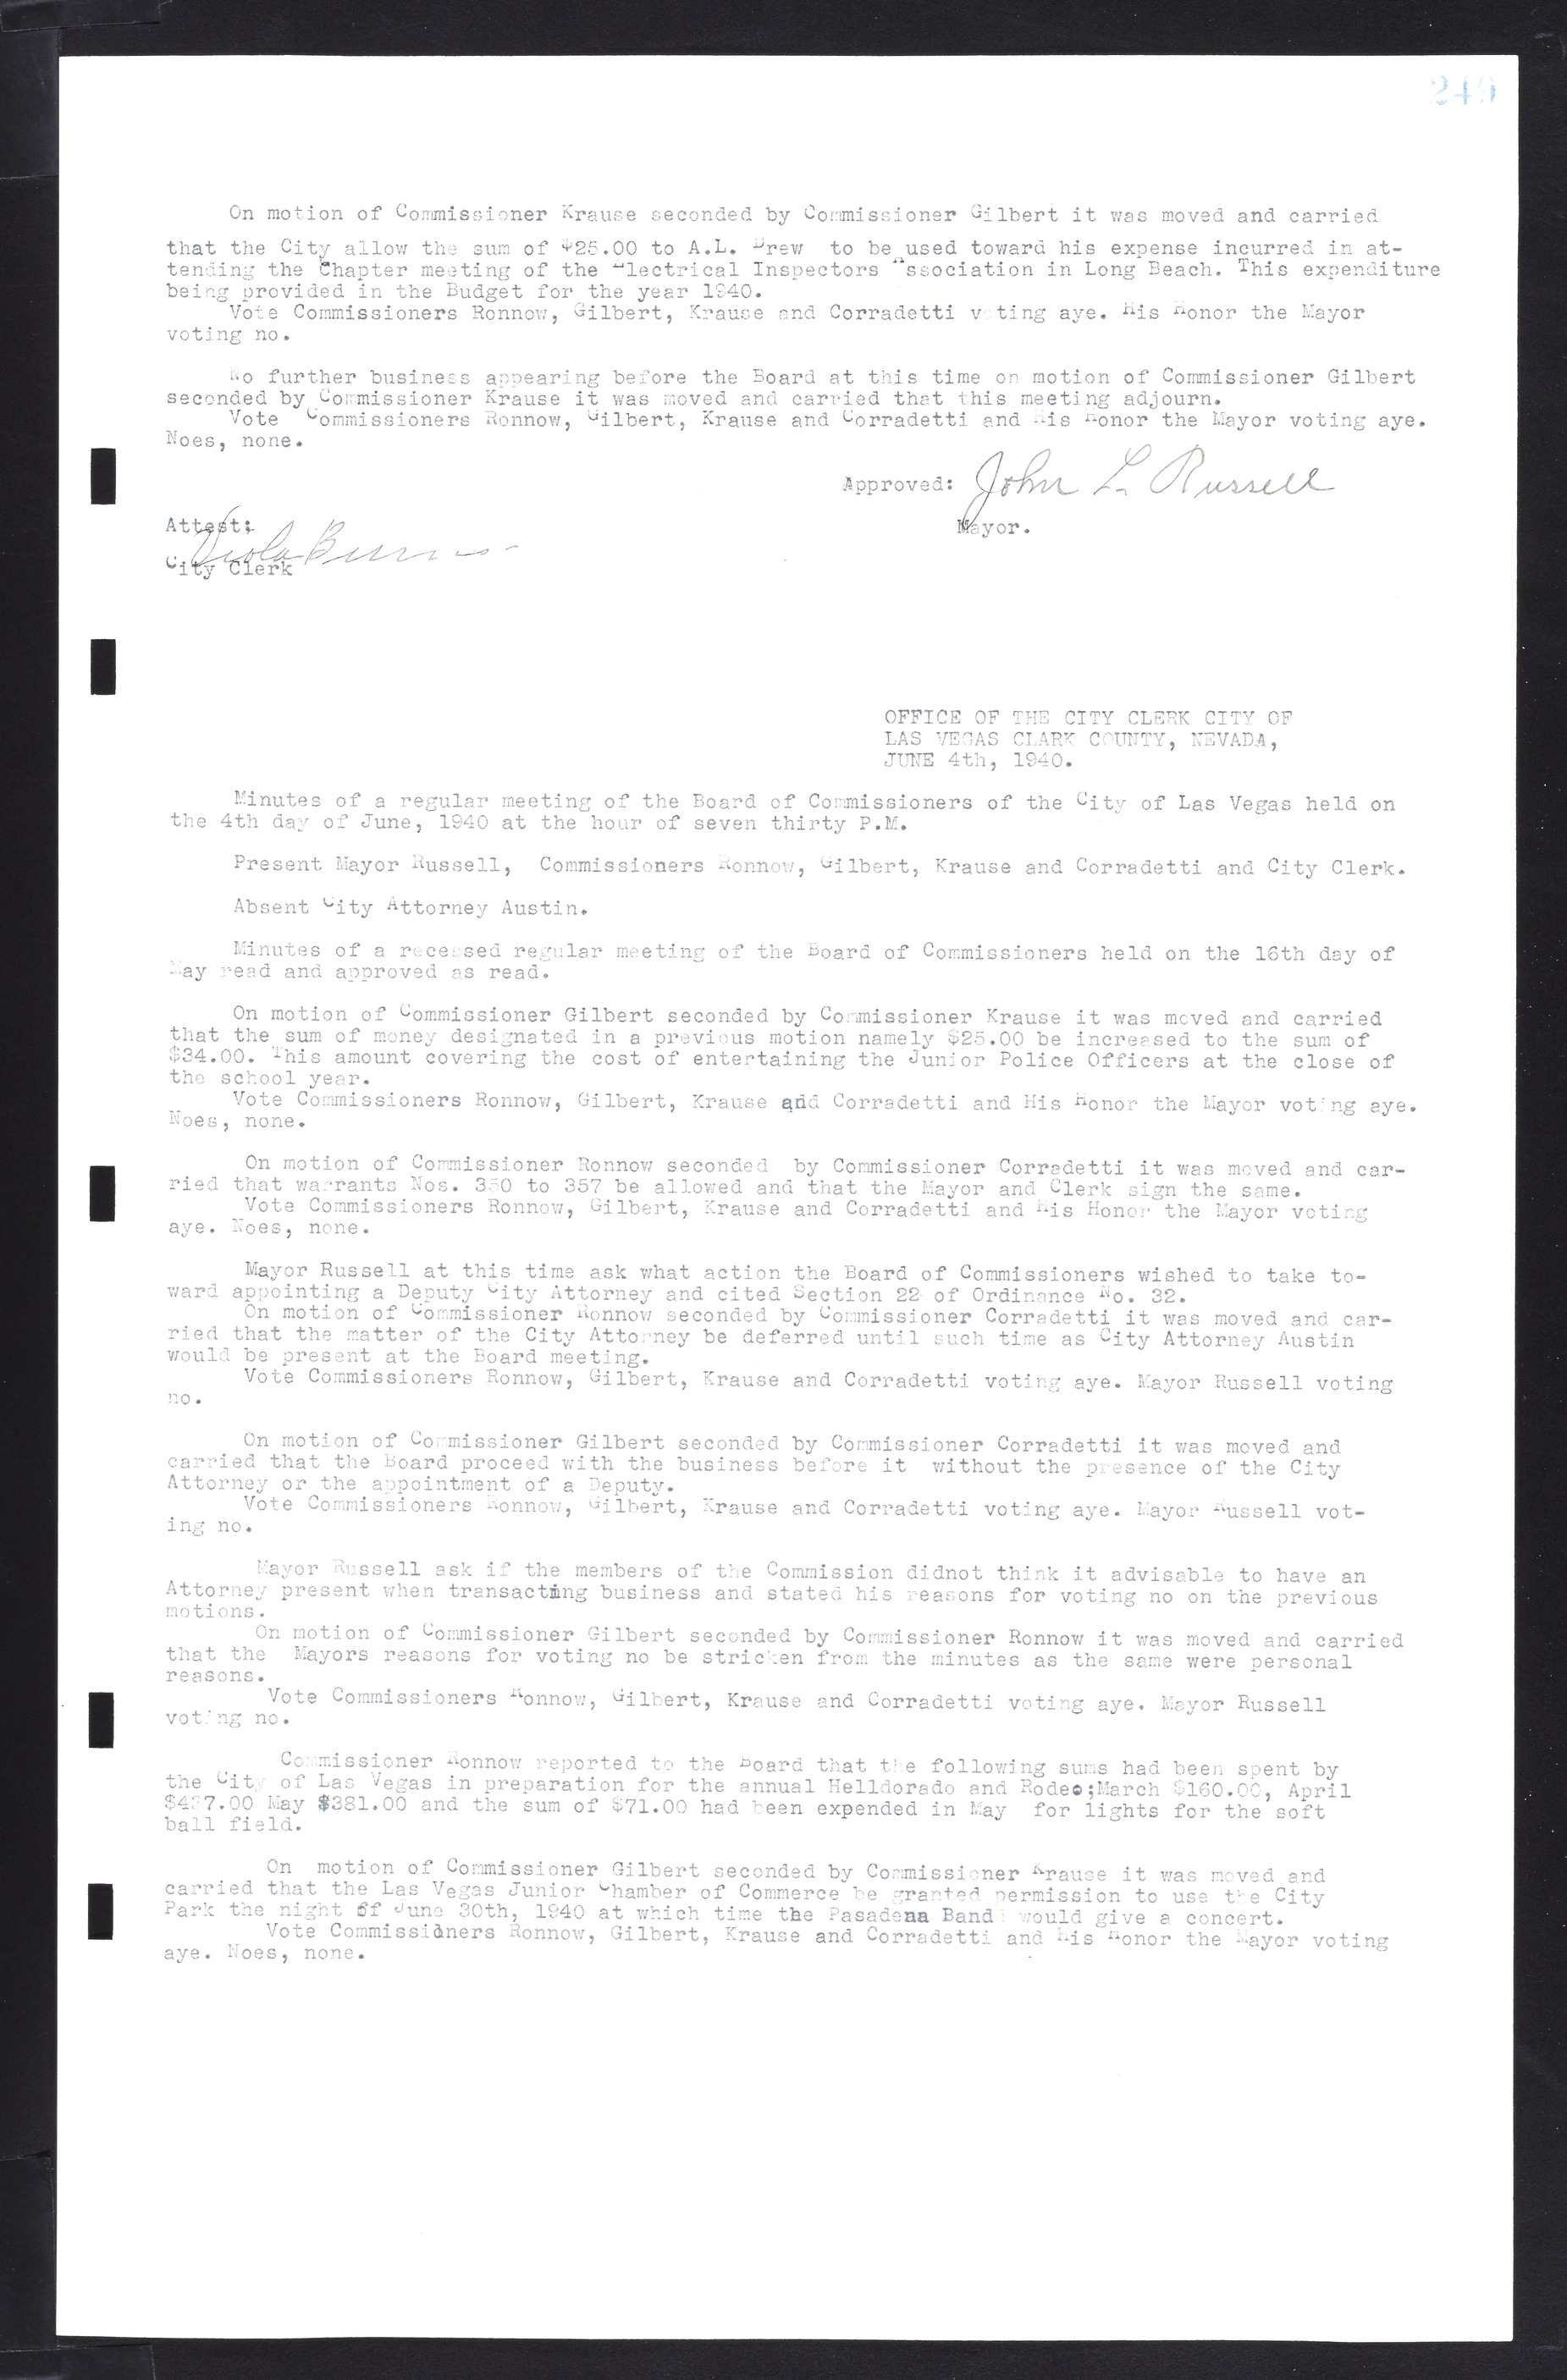 Las Vegas City Commission Minutes, February 17, 1937 to August 4, 1942, lvc000004-269